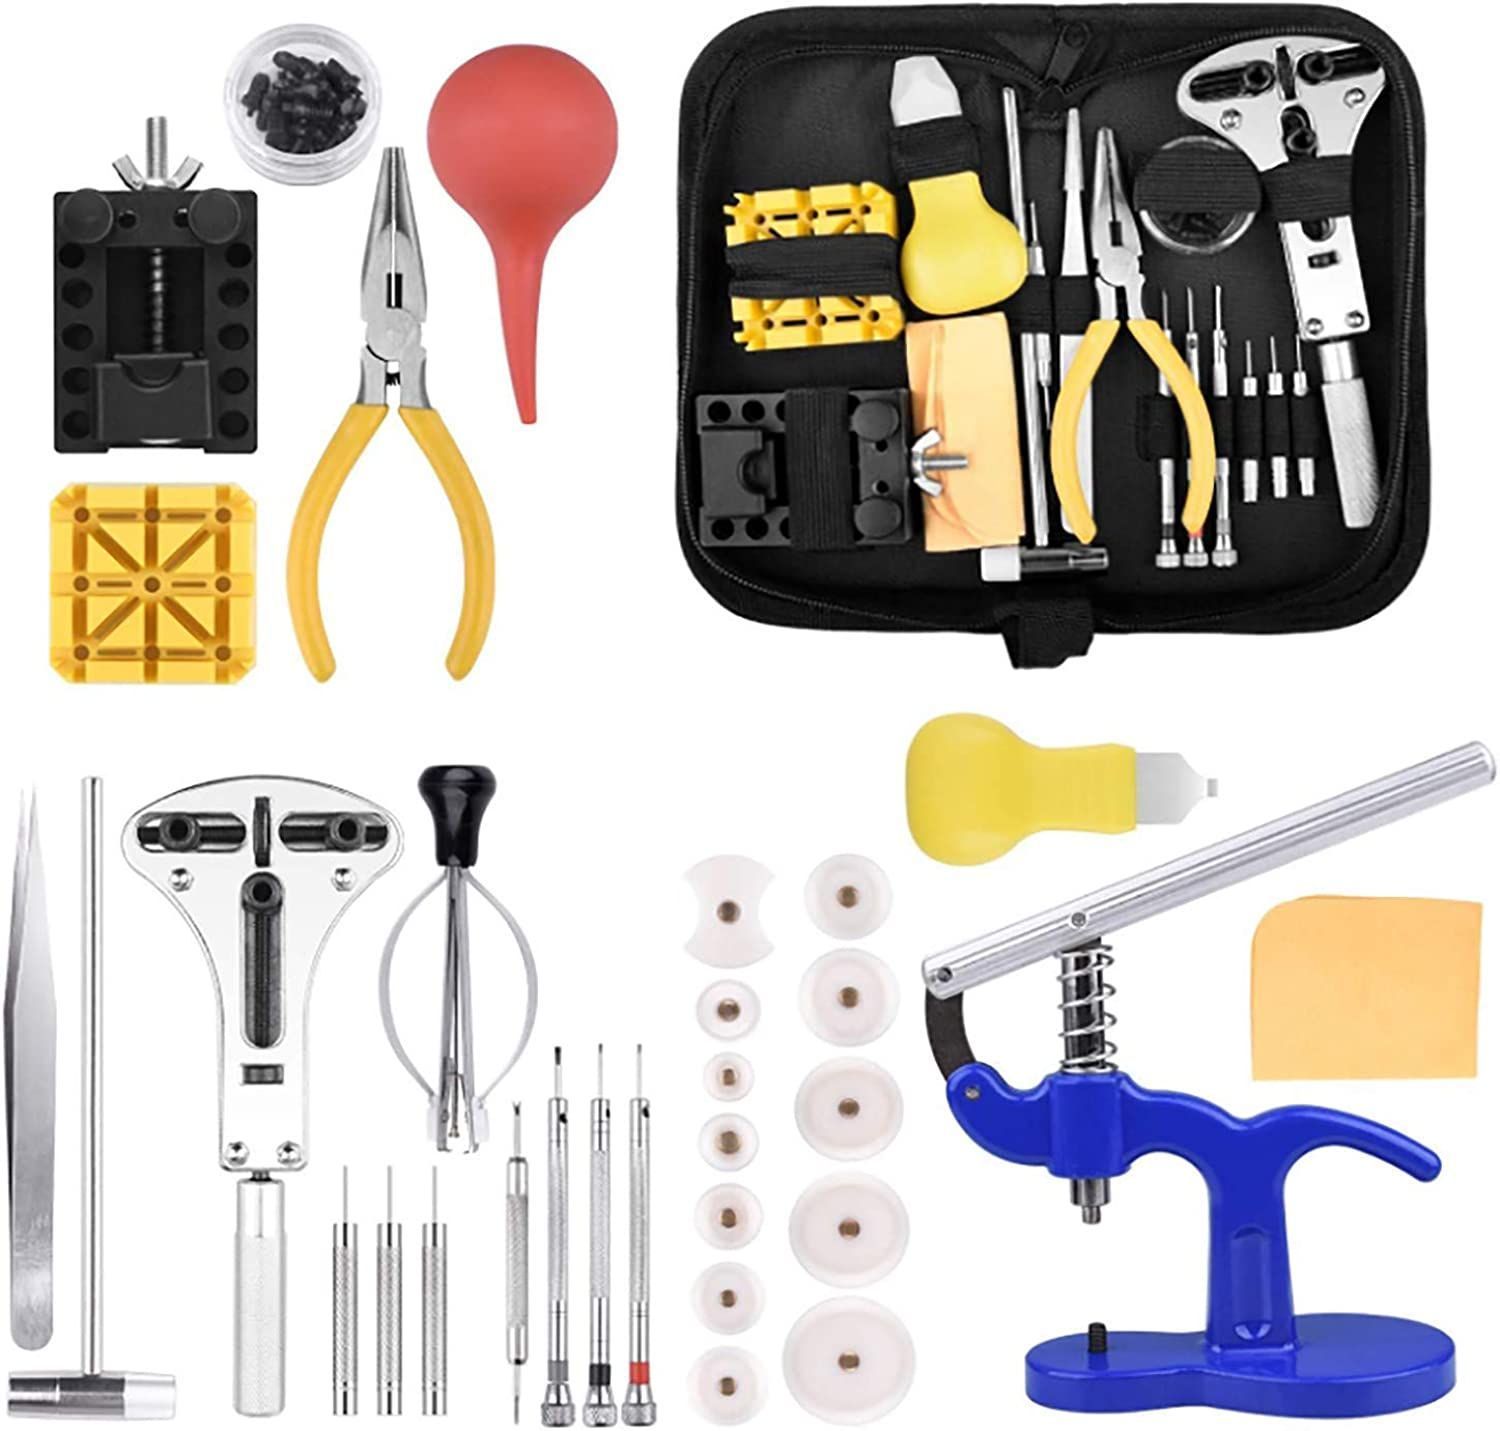 Items tools